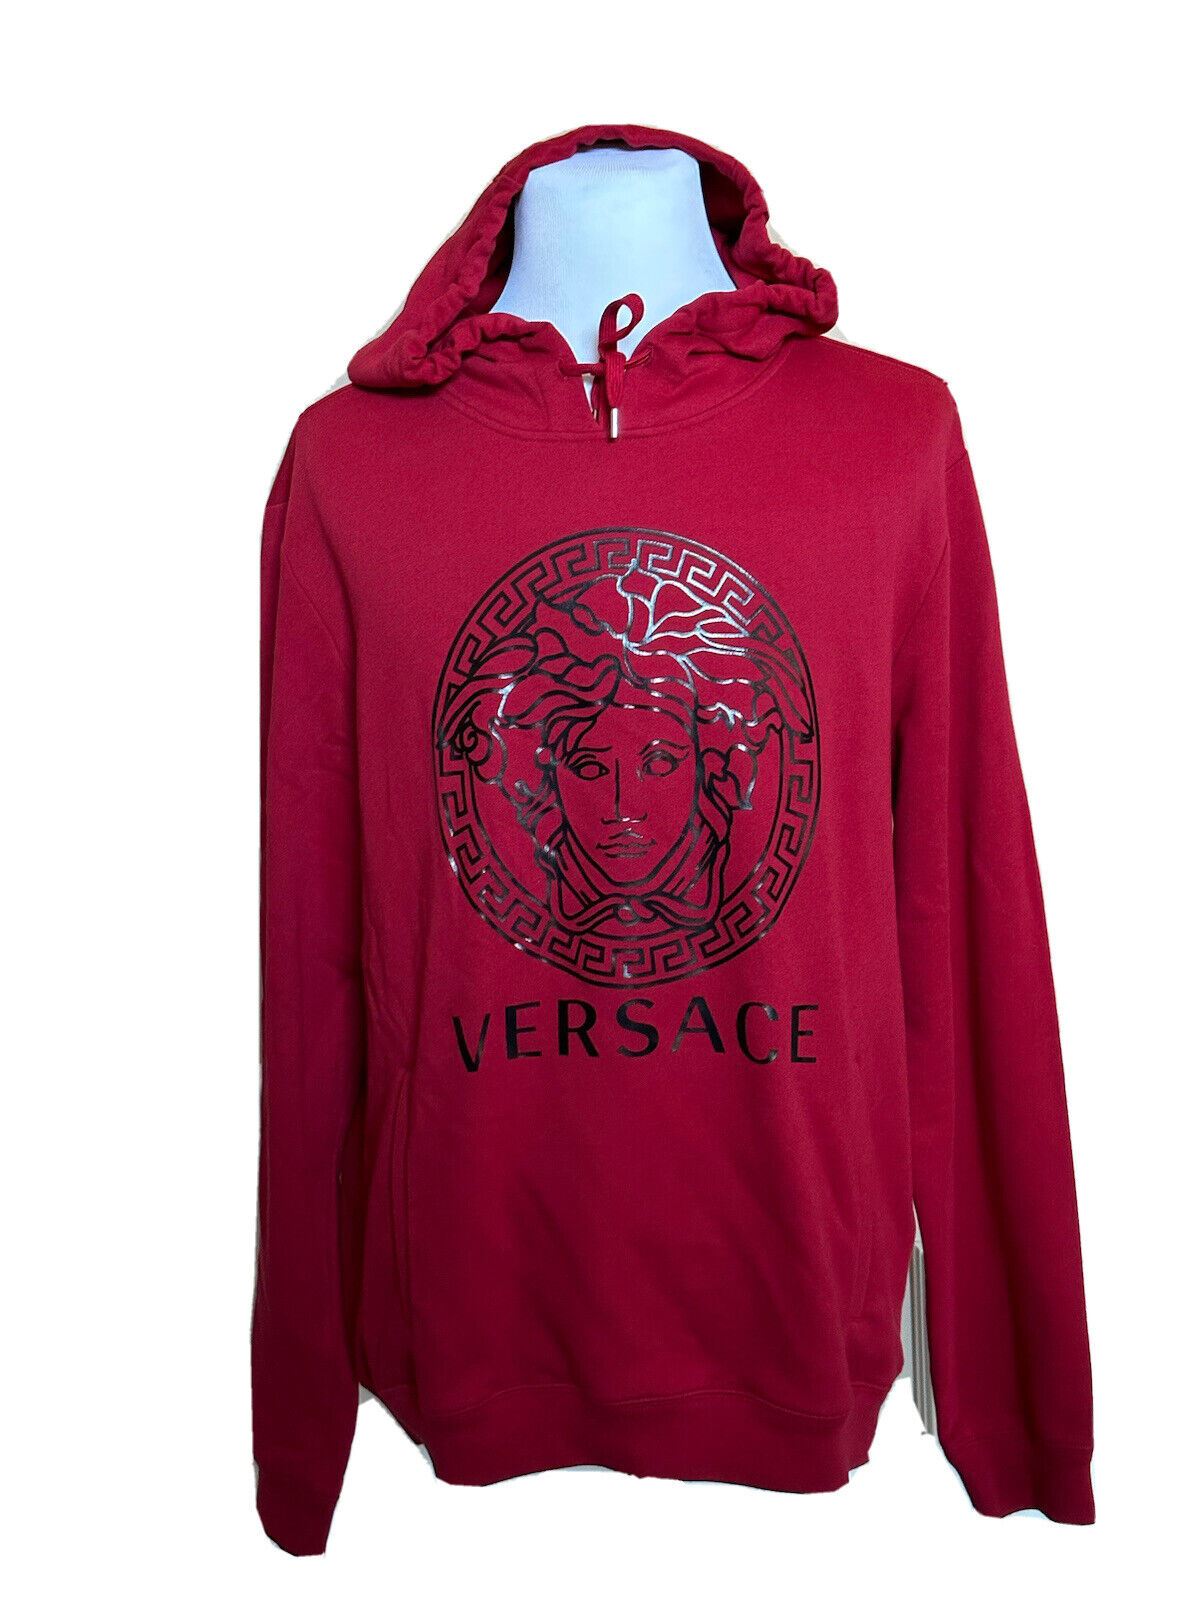 Neu mit Etikett: 750 $ Versace Medusa Print Rotes Baumwoll-Sweatshirt mit Kapuze 5XL A89514S IT 